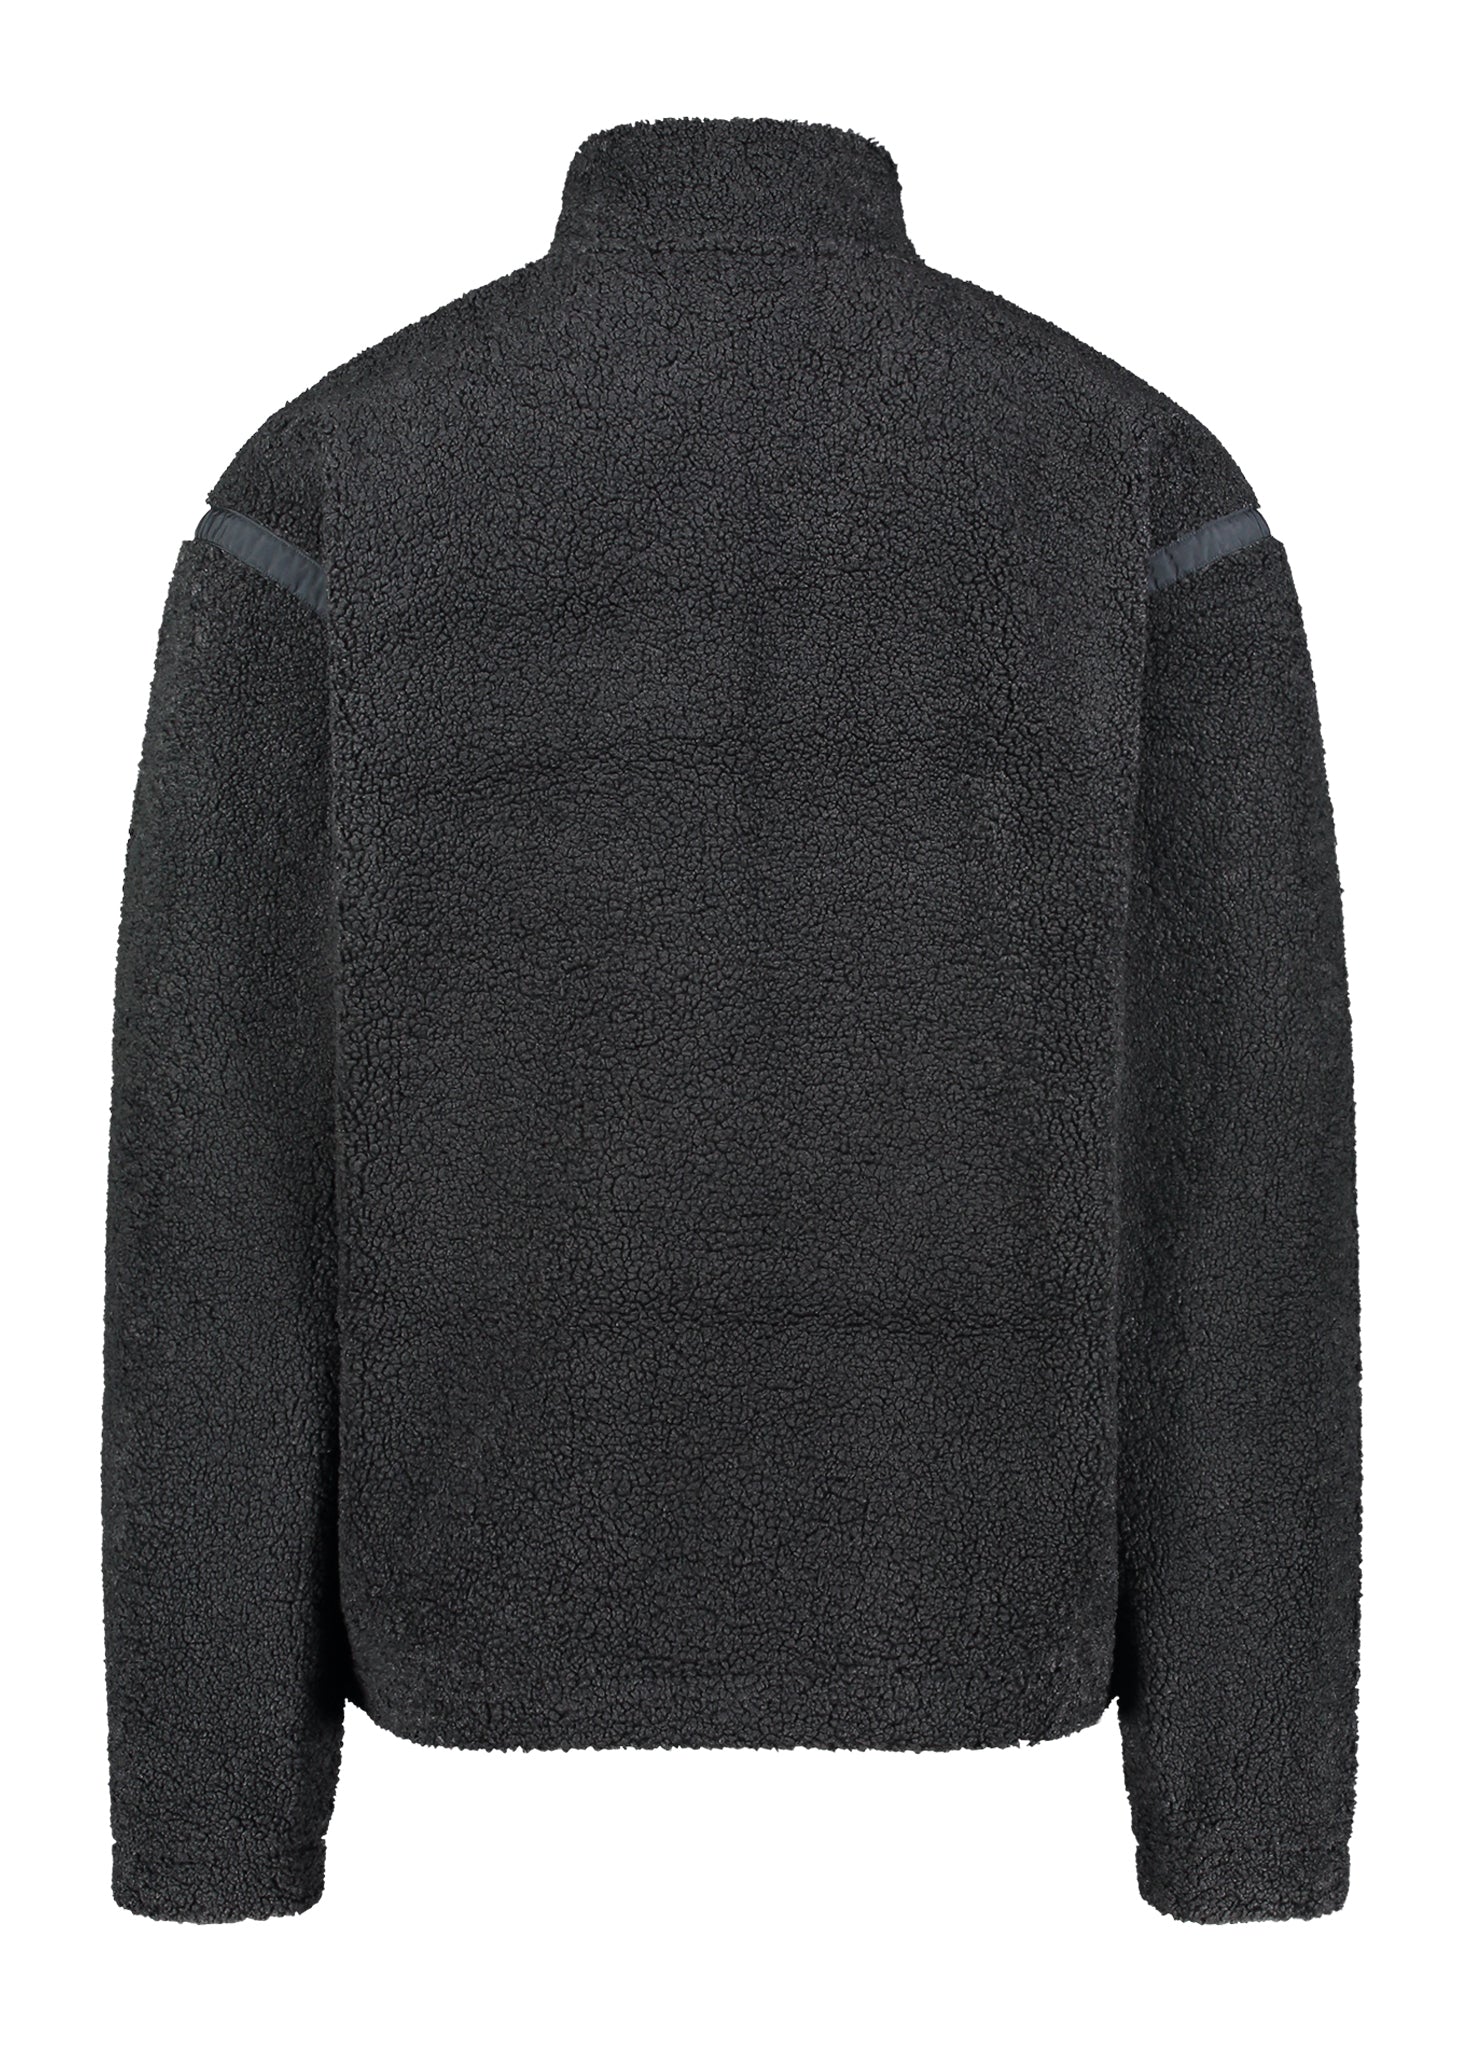 Adidas Press Fleece - Black